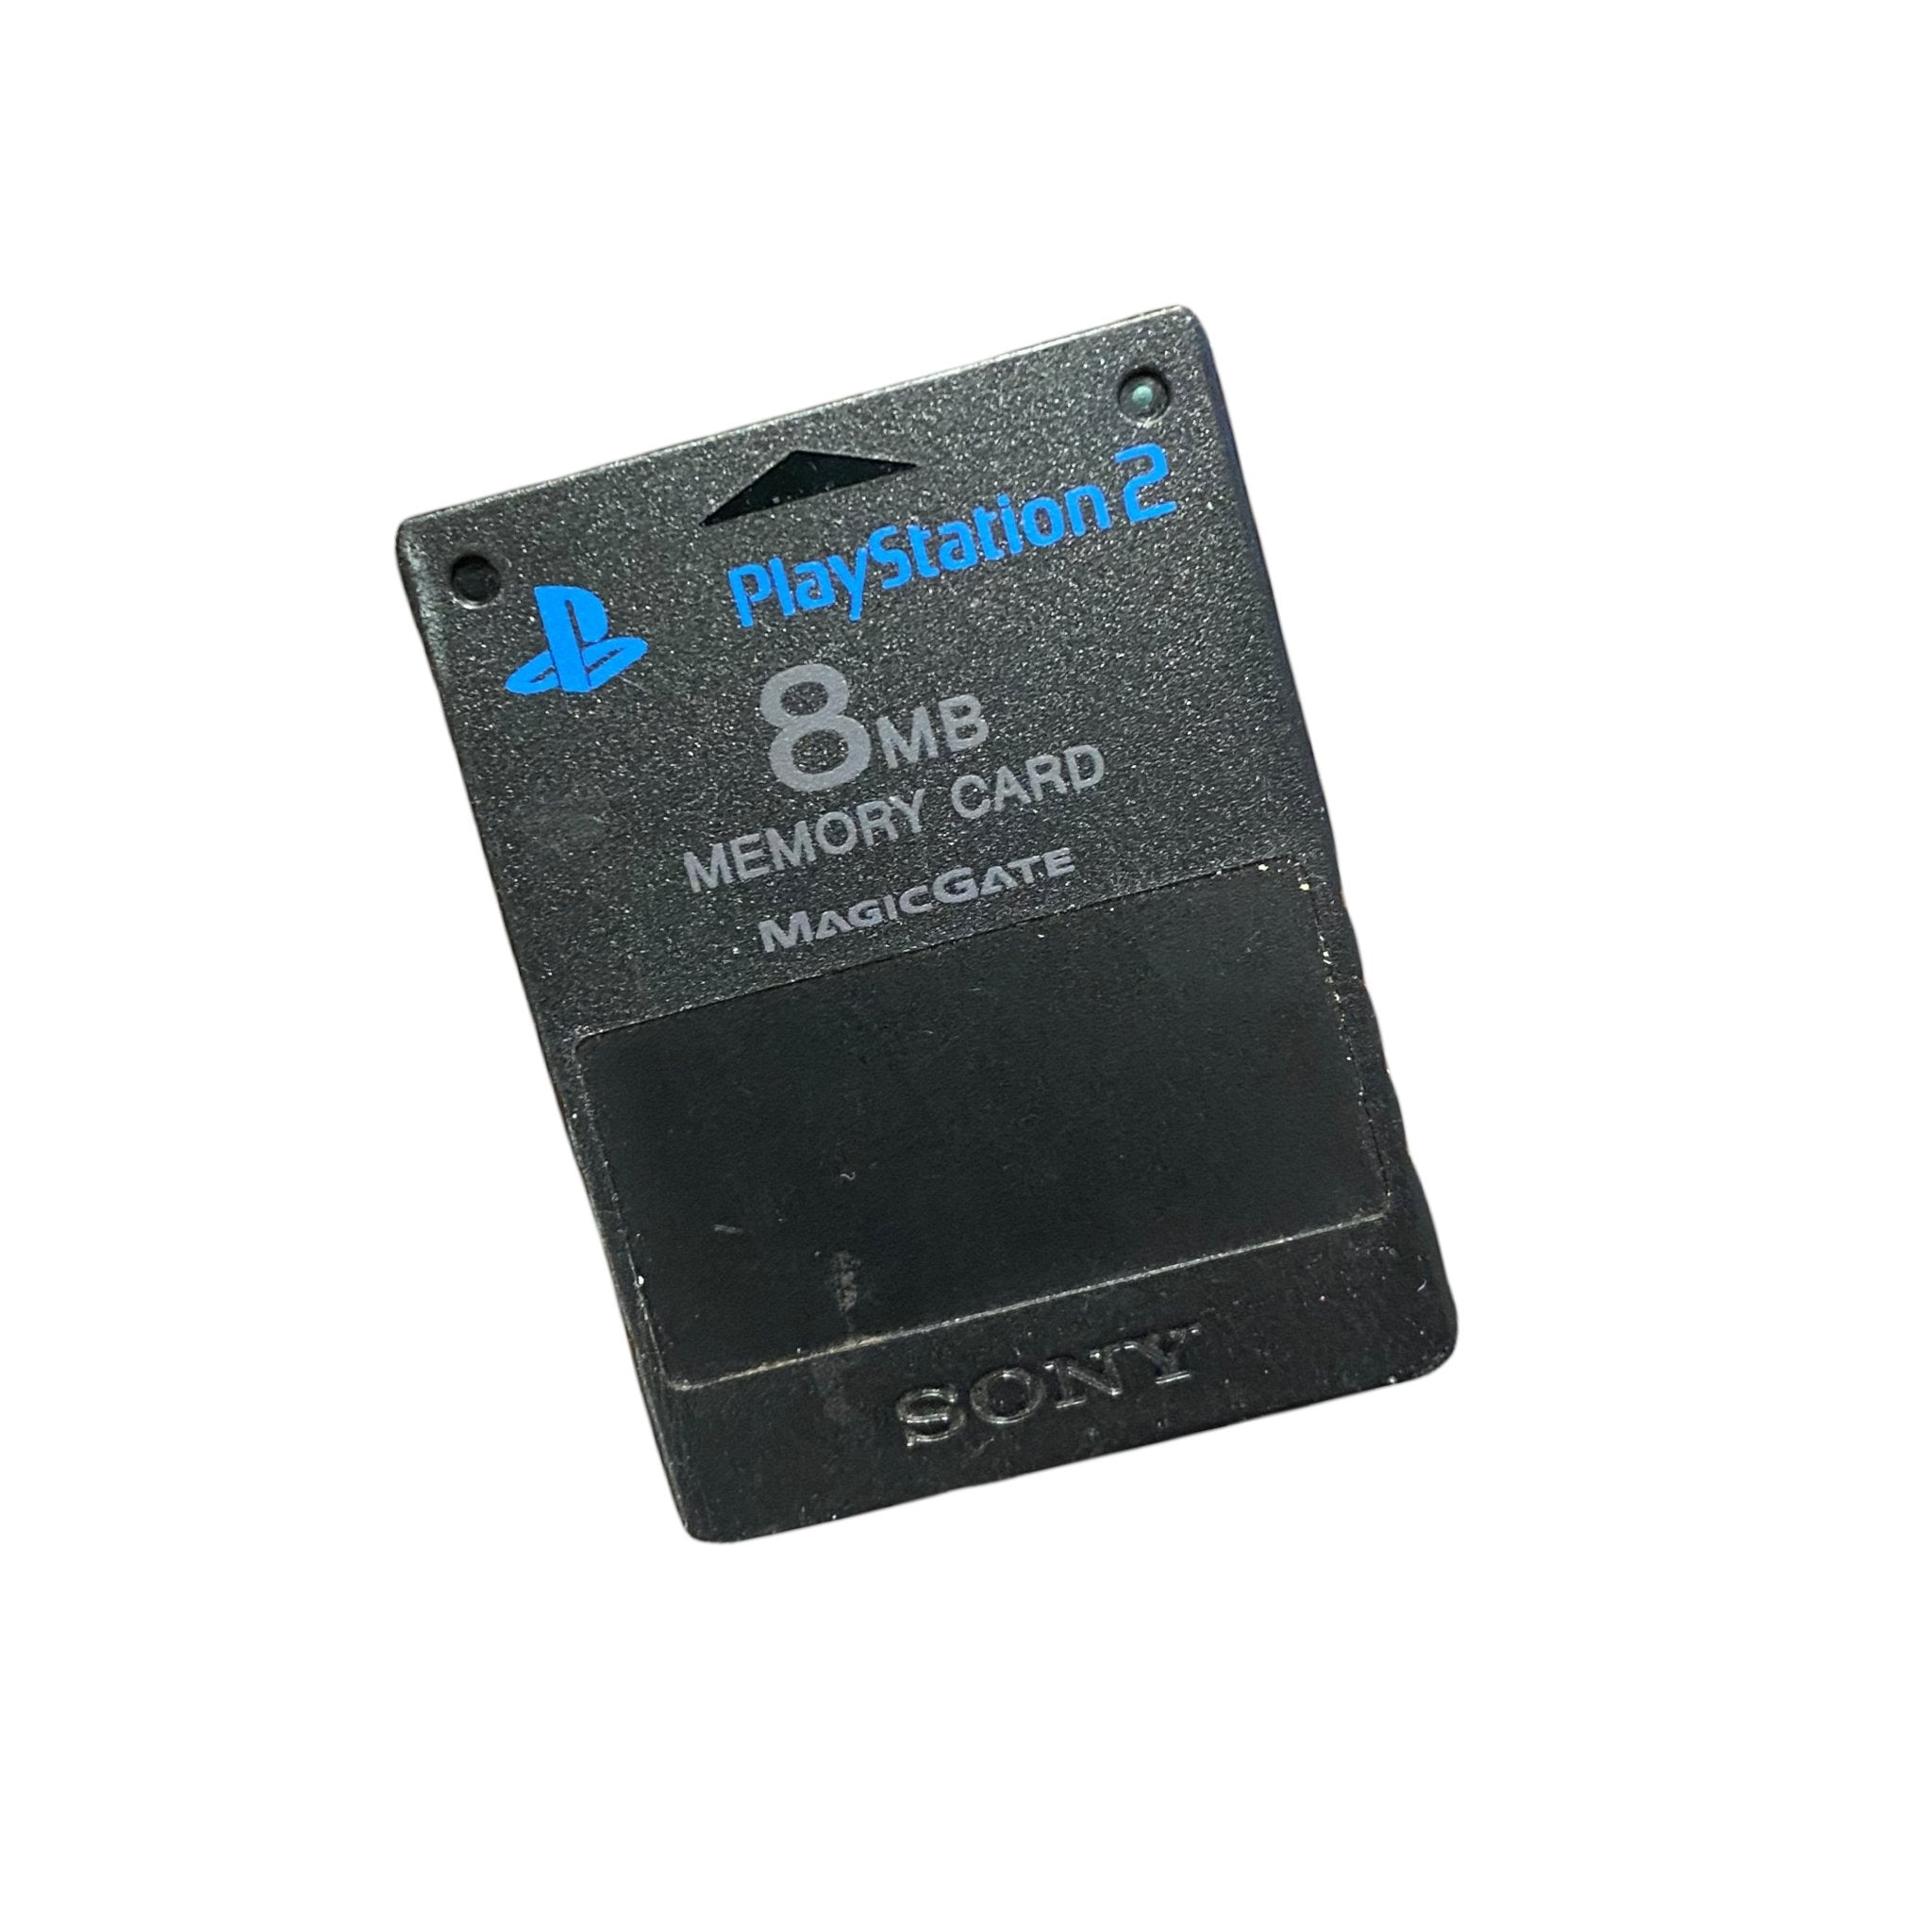 Playstation 2 PS2 used Memory Card 8MB